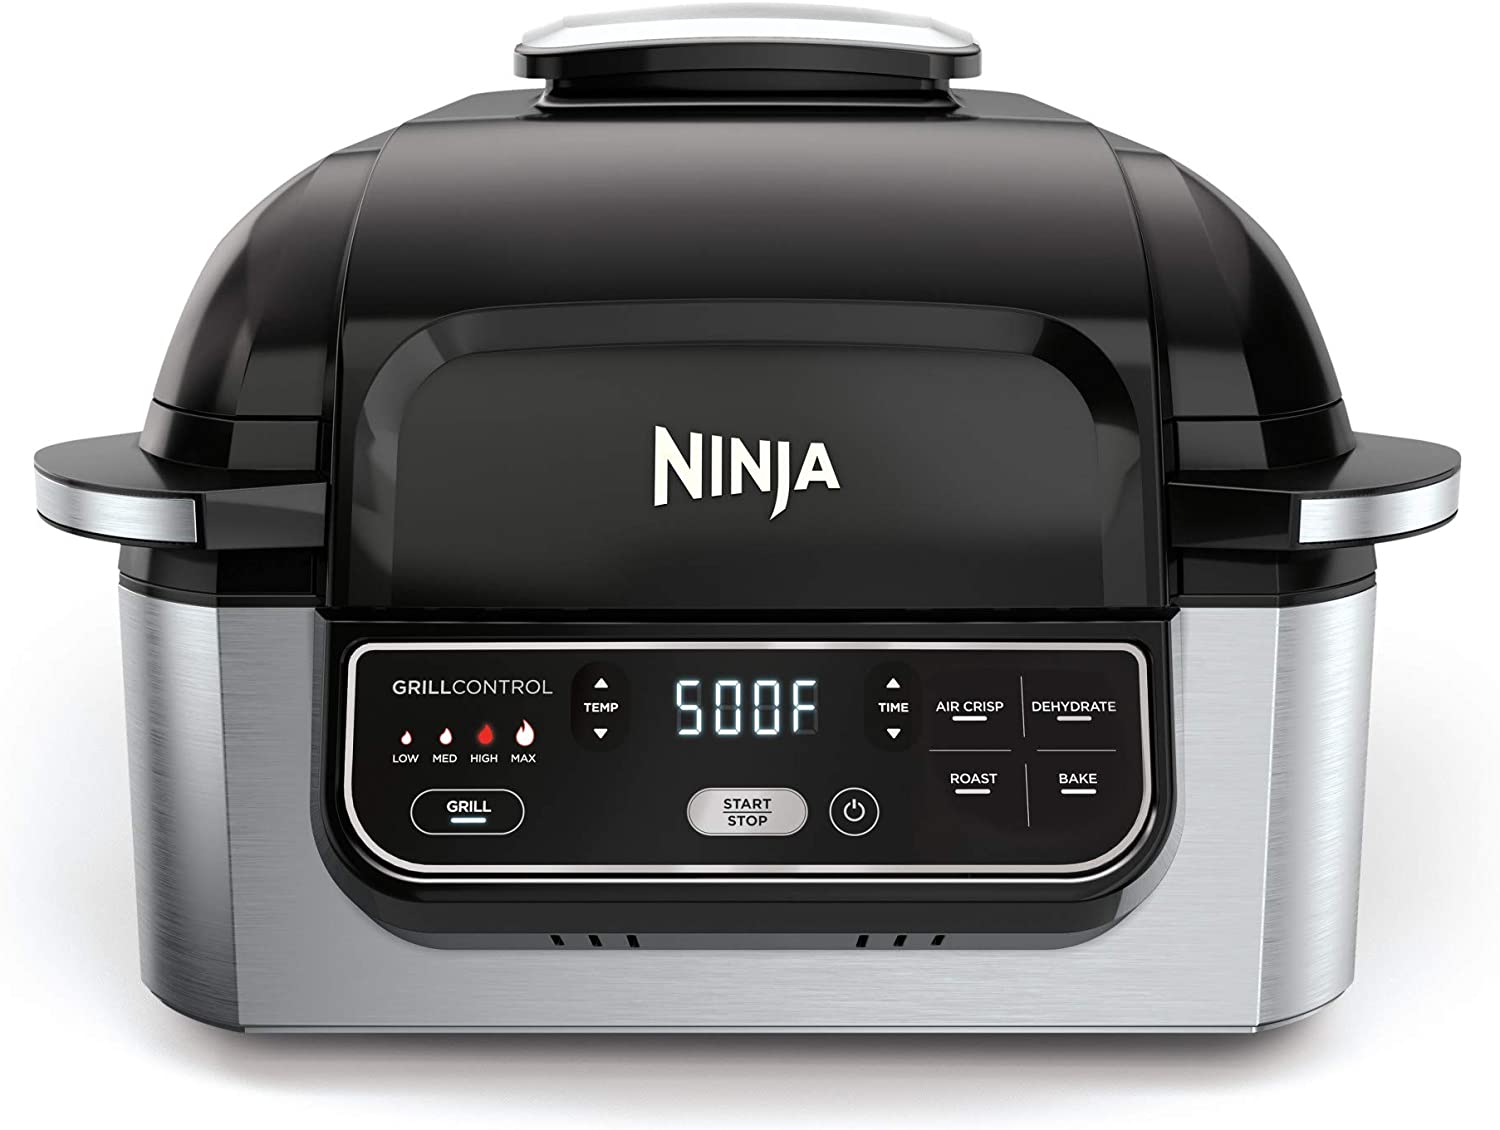 Ninja Foodi pro air fryer and indoor grill.